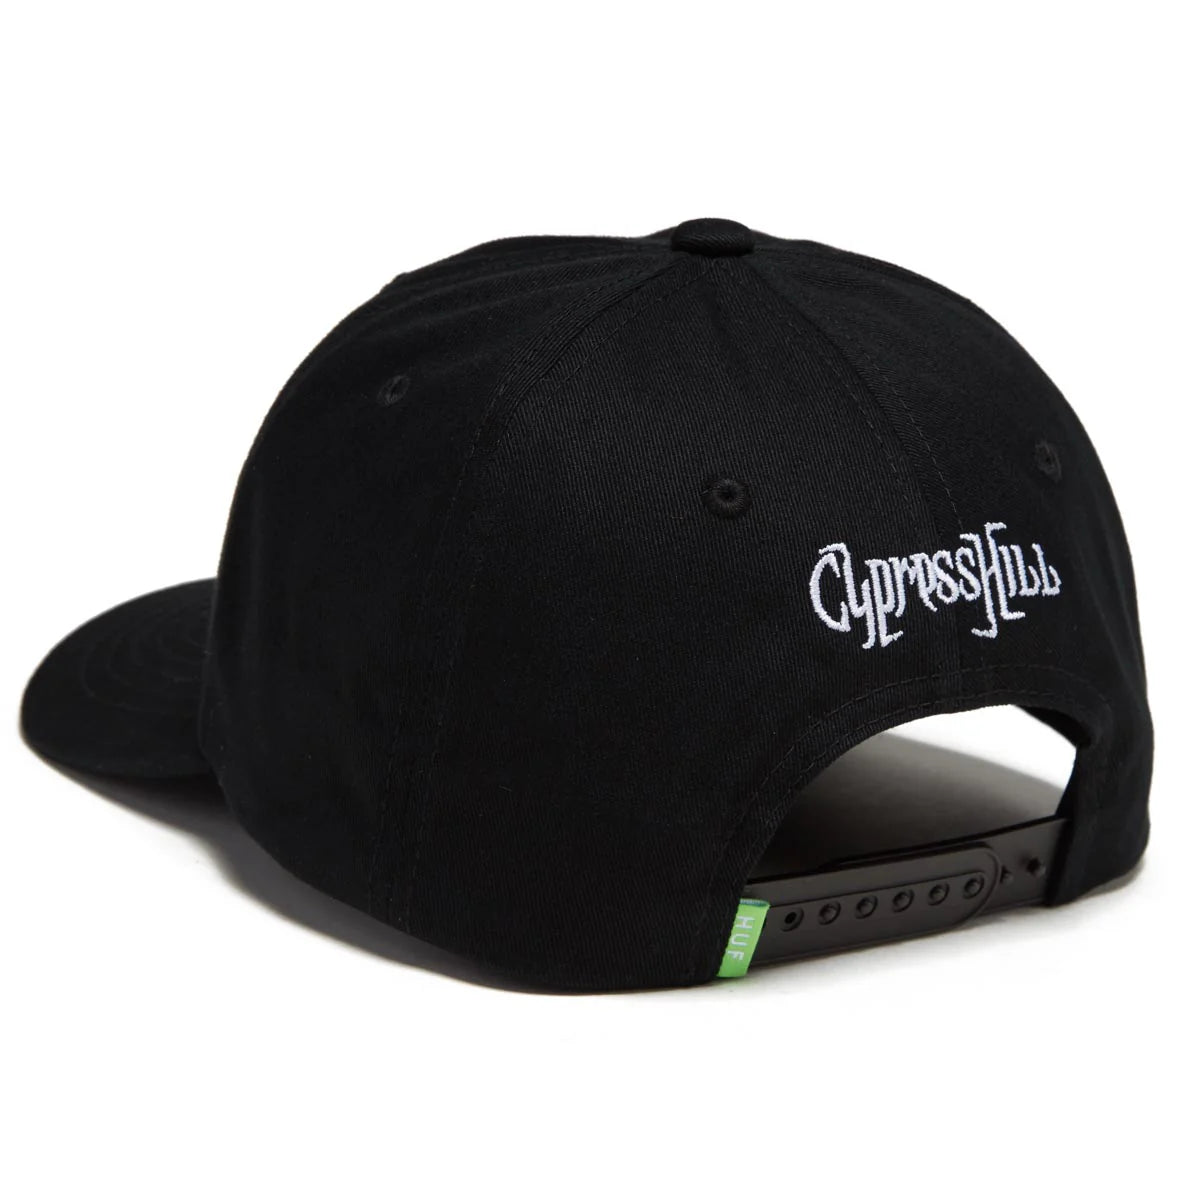 HUF X Cypress Hill - Insane Snapback Black Hat